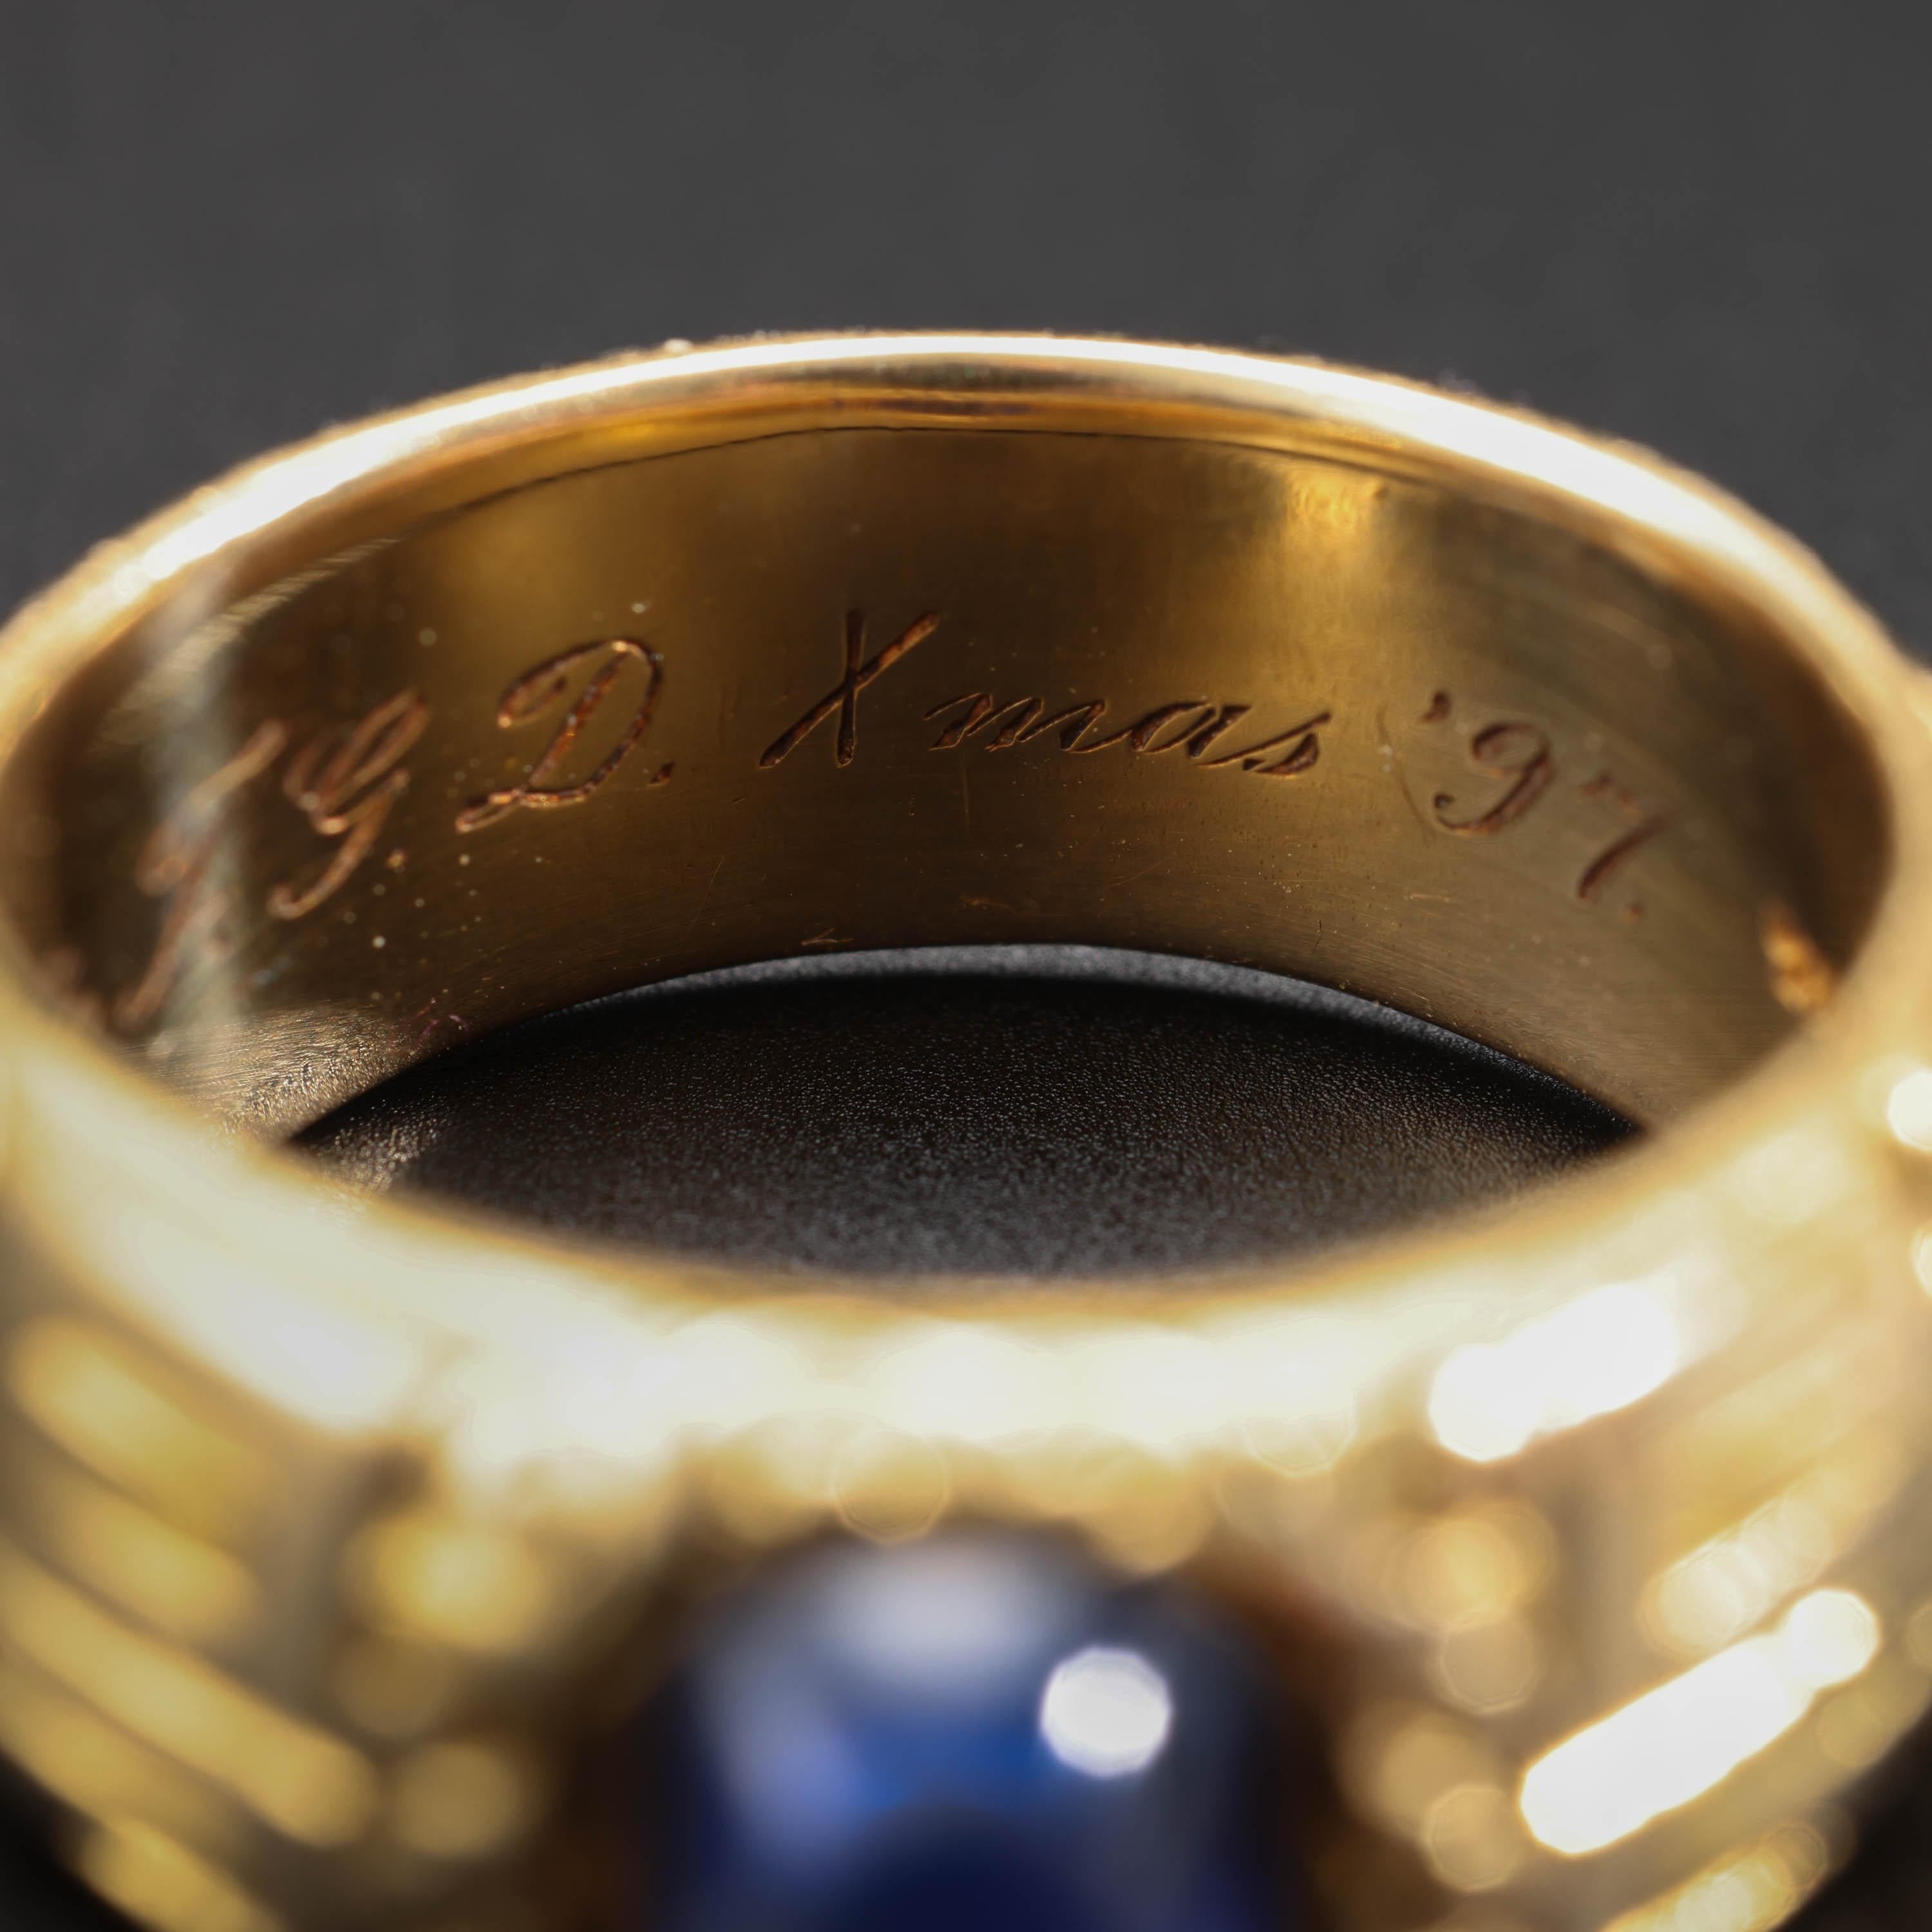 Tiffany & Co. Kashmir Sapphire Ring Edwardian AGL Certified Untreated 3